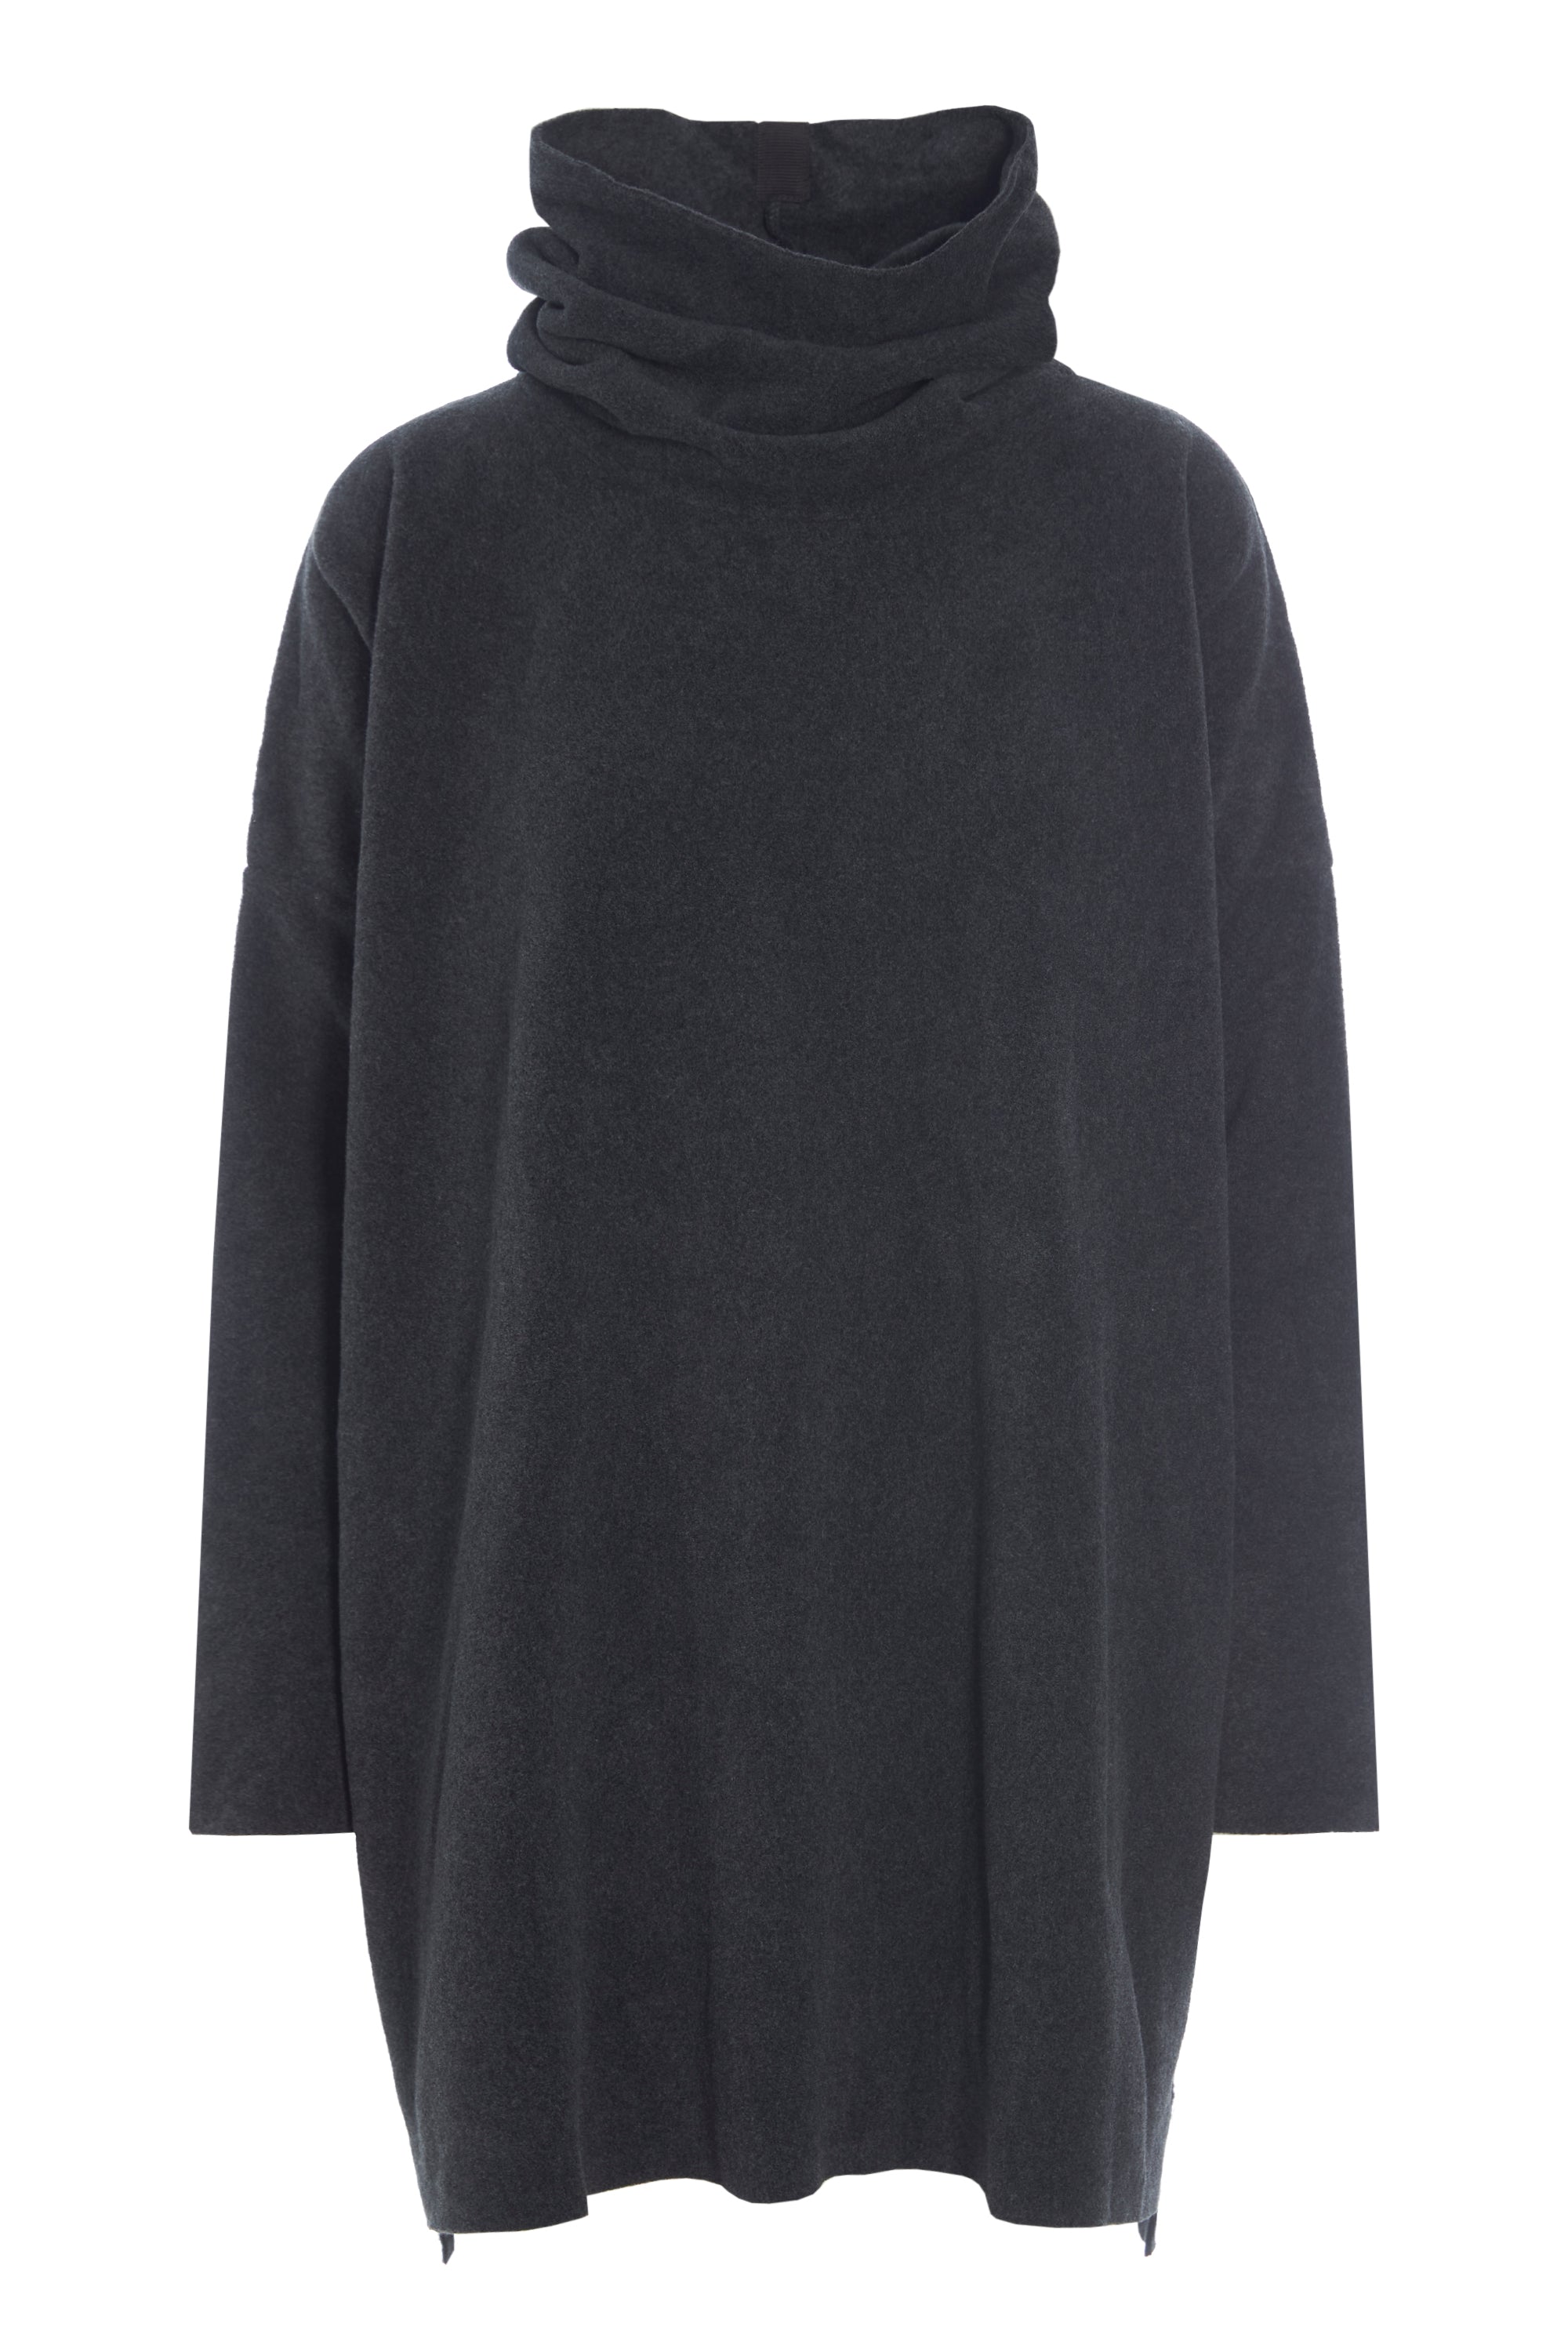 Henriette Steffensen Copenhagen Fleece Cardigan Sweater Long Gray Oeko-Tex  XS